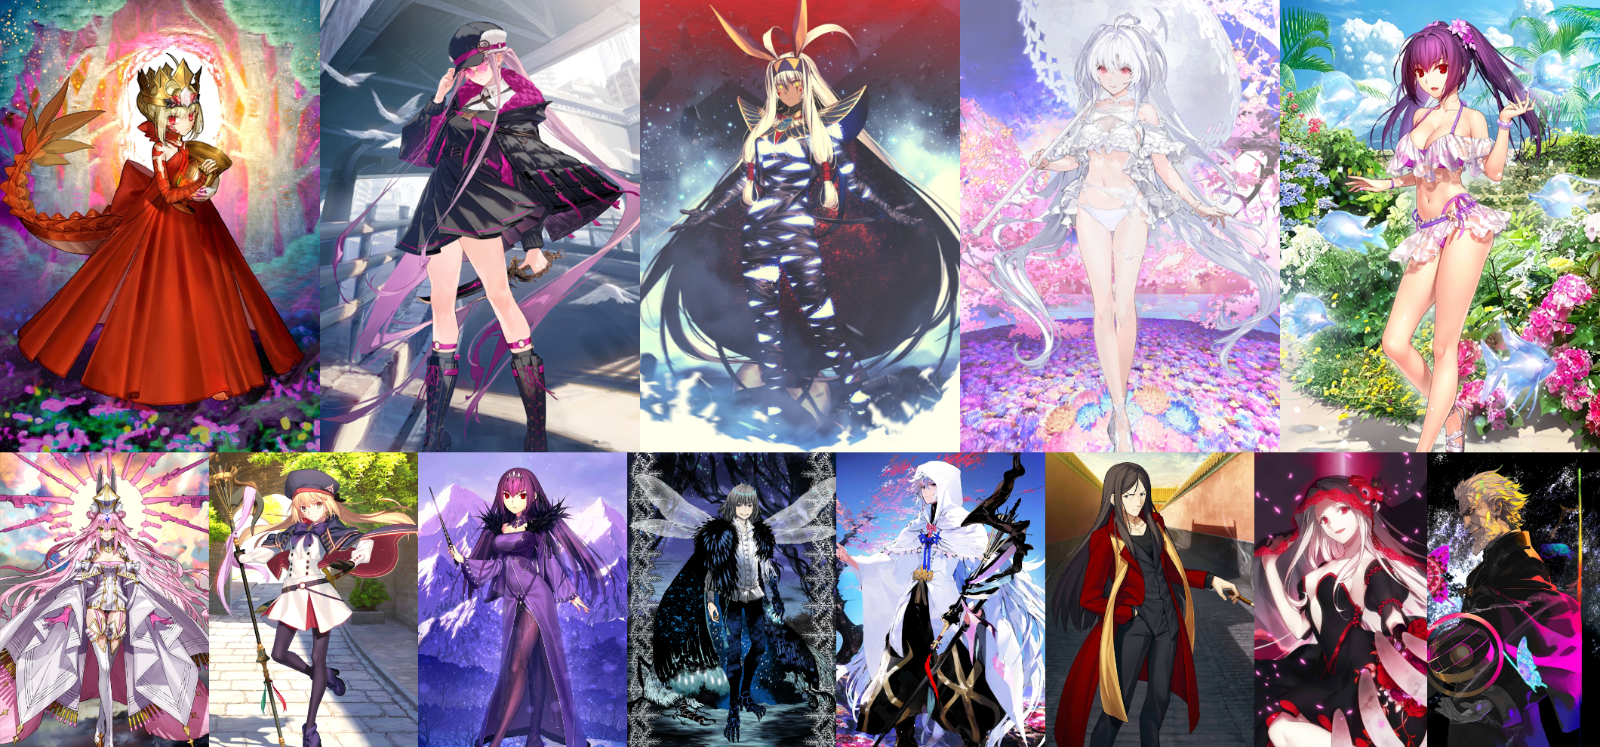 [JP] FGO NP2 Draco +Medusa Ibuki Lady Avalon Koyanskaya Castoria Skadi Fate Grand Order endgame account-Mobile Games Starter